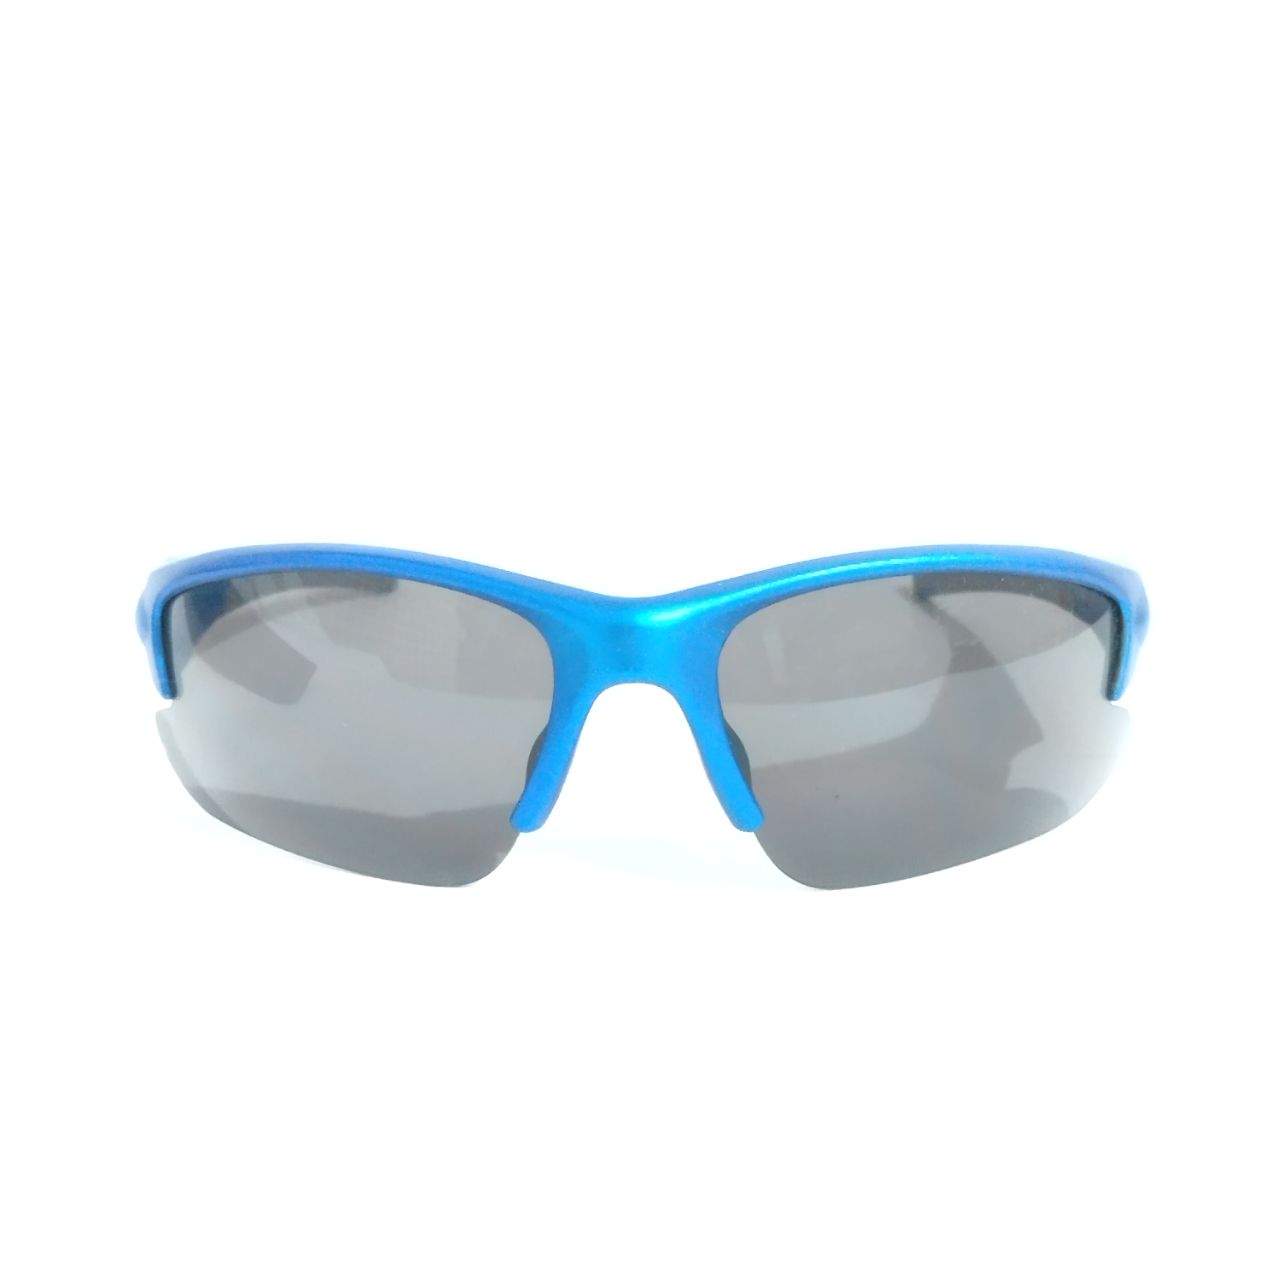 Blue Wraparound Sports Sunglasses